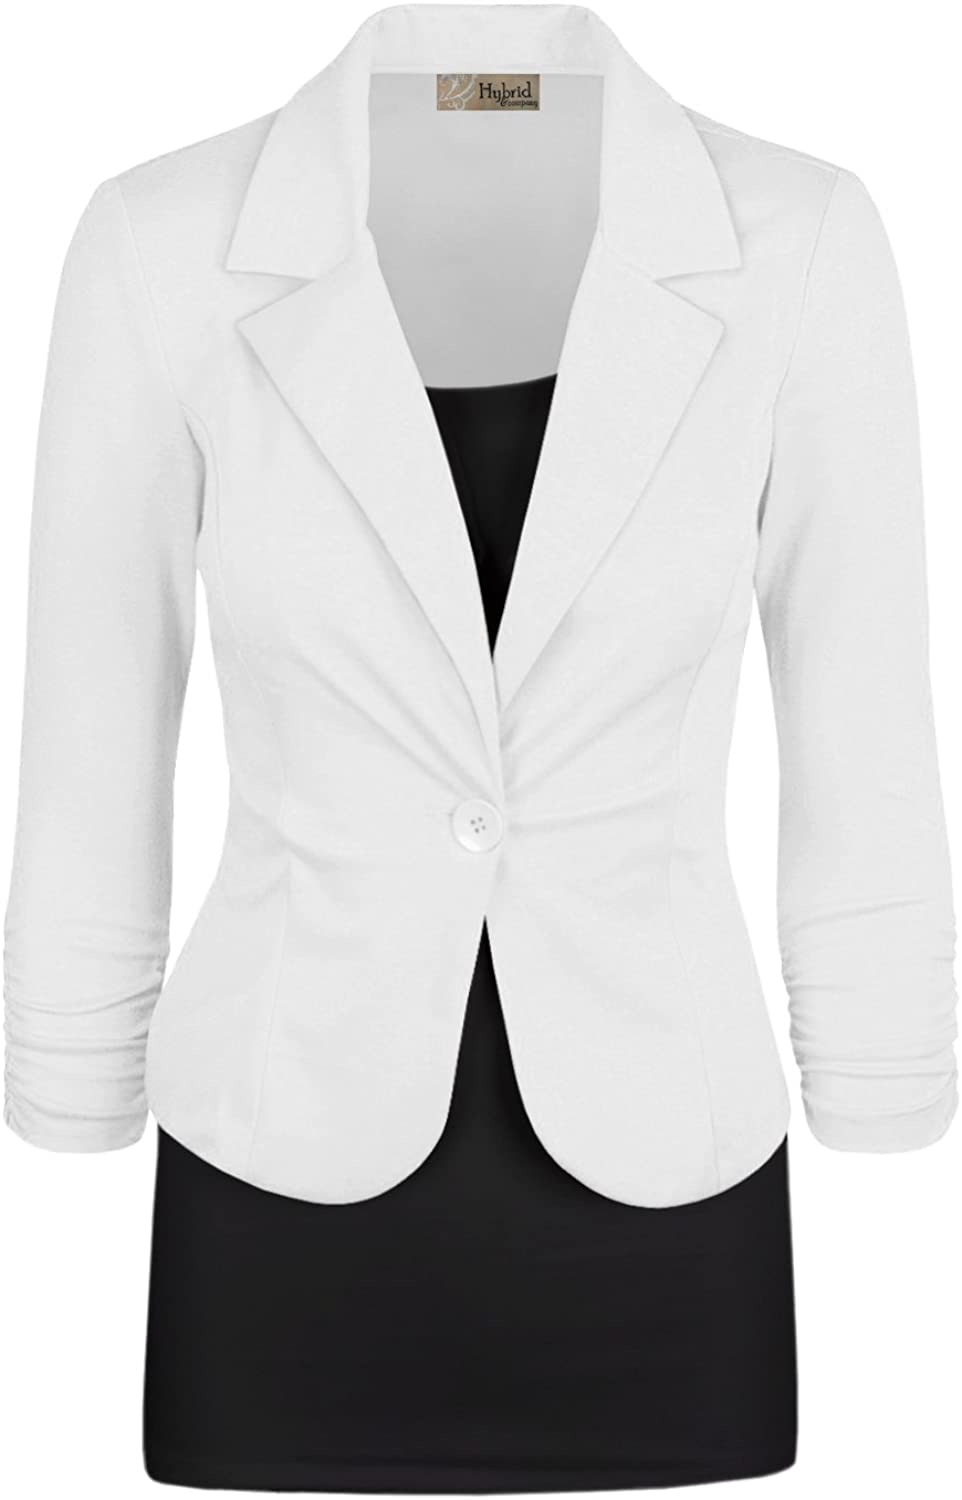 Hybrid & Company Womens Casual Work Office Blazer Jacket Made in USA 